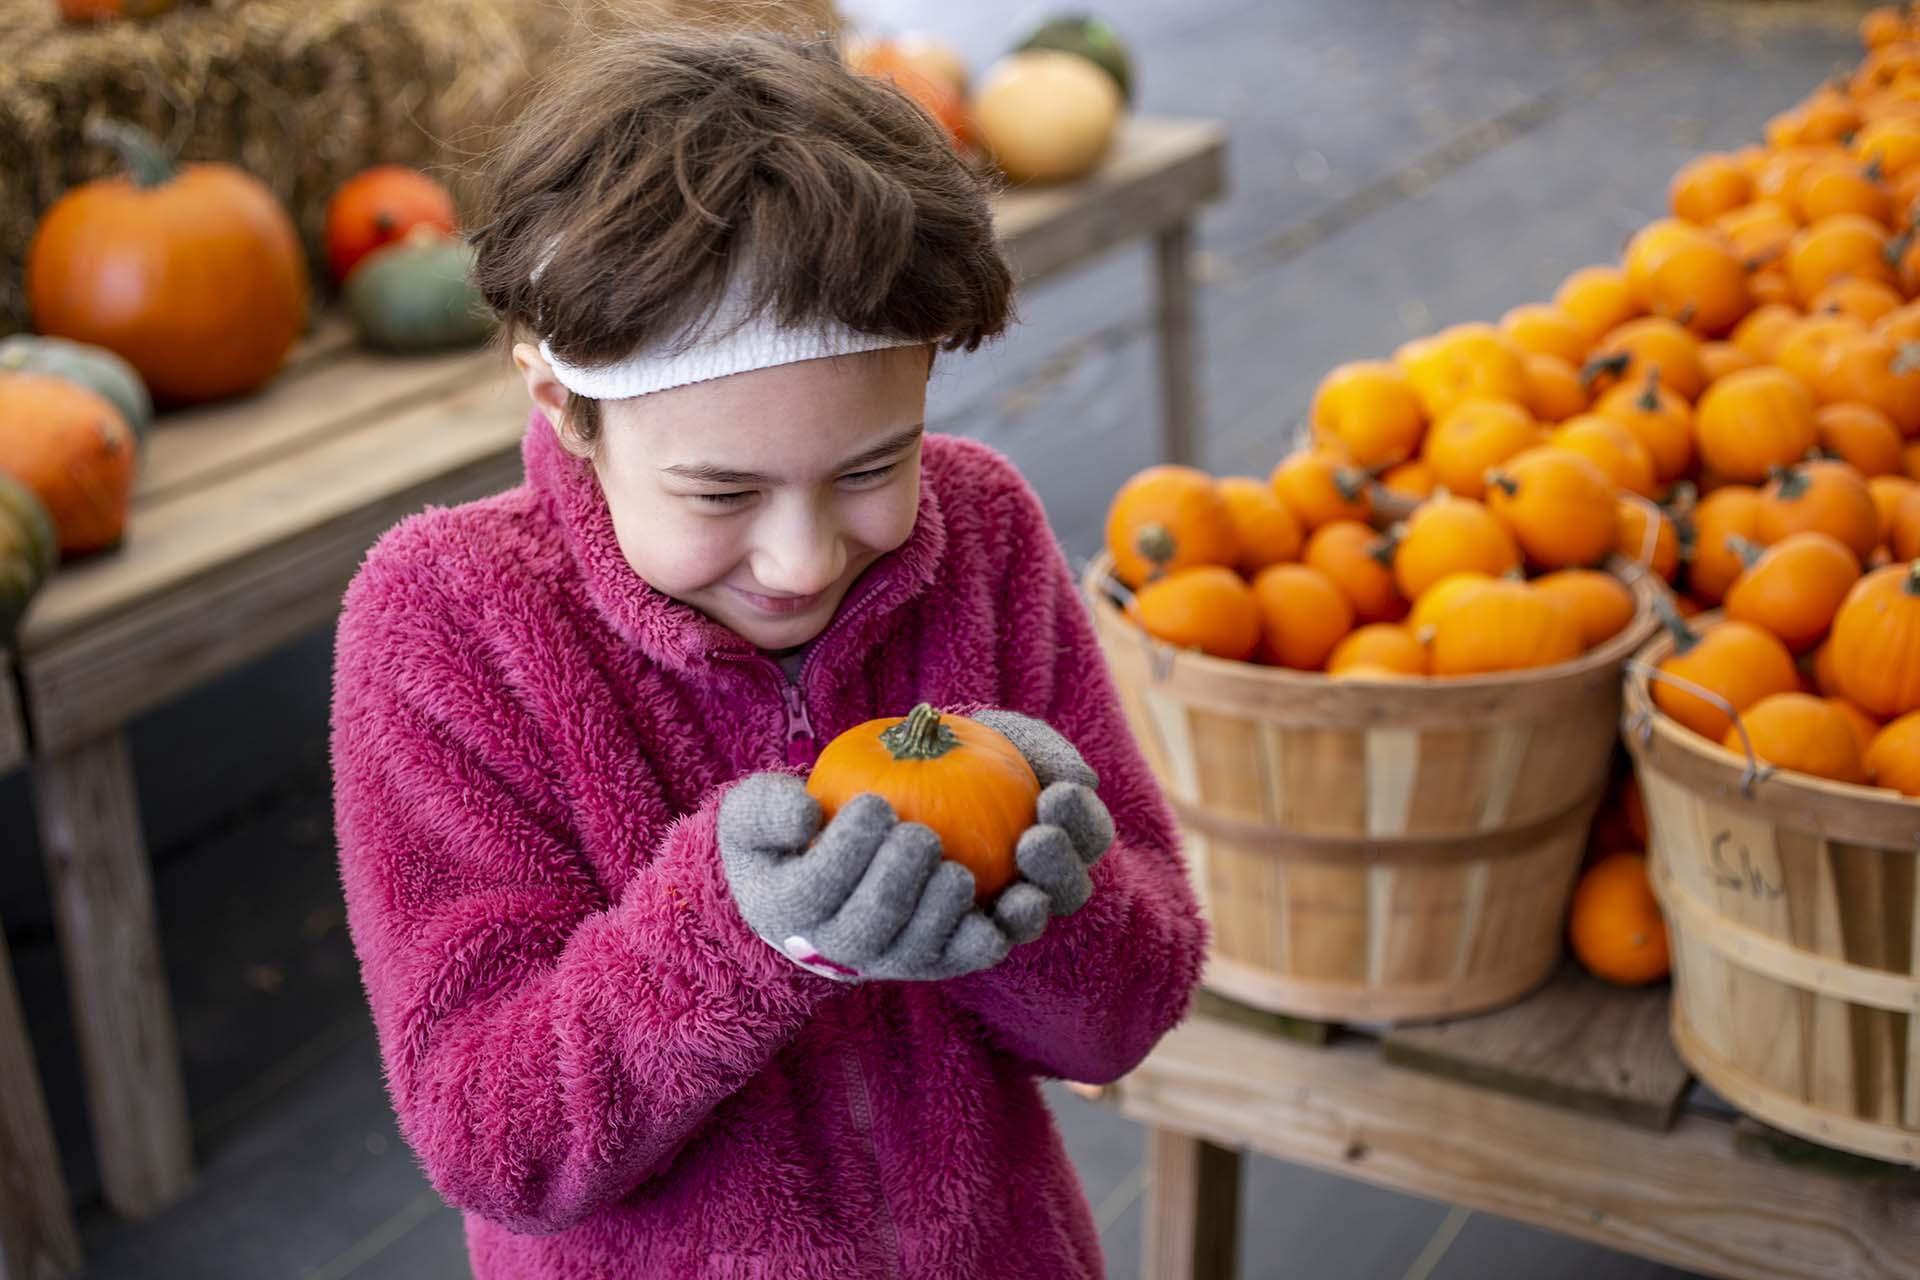 A child holding a small pumpkin.